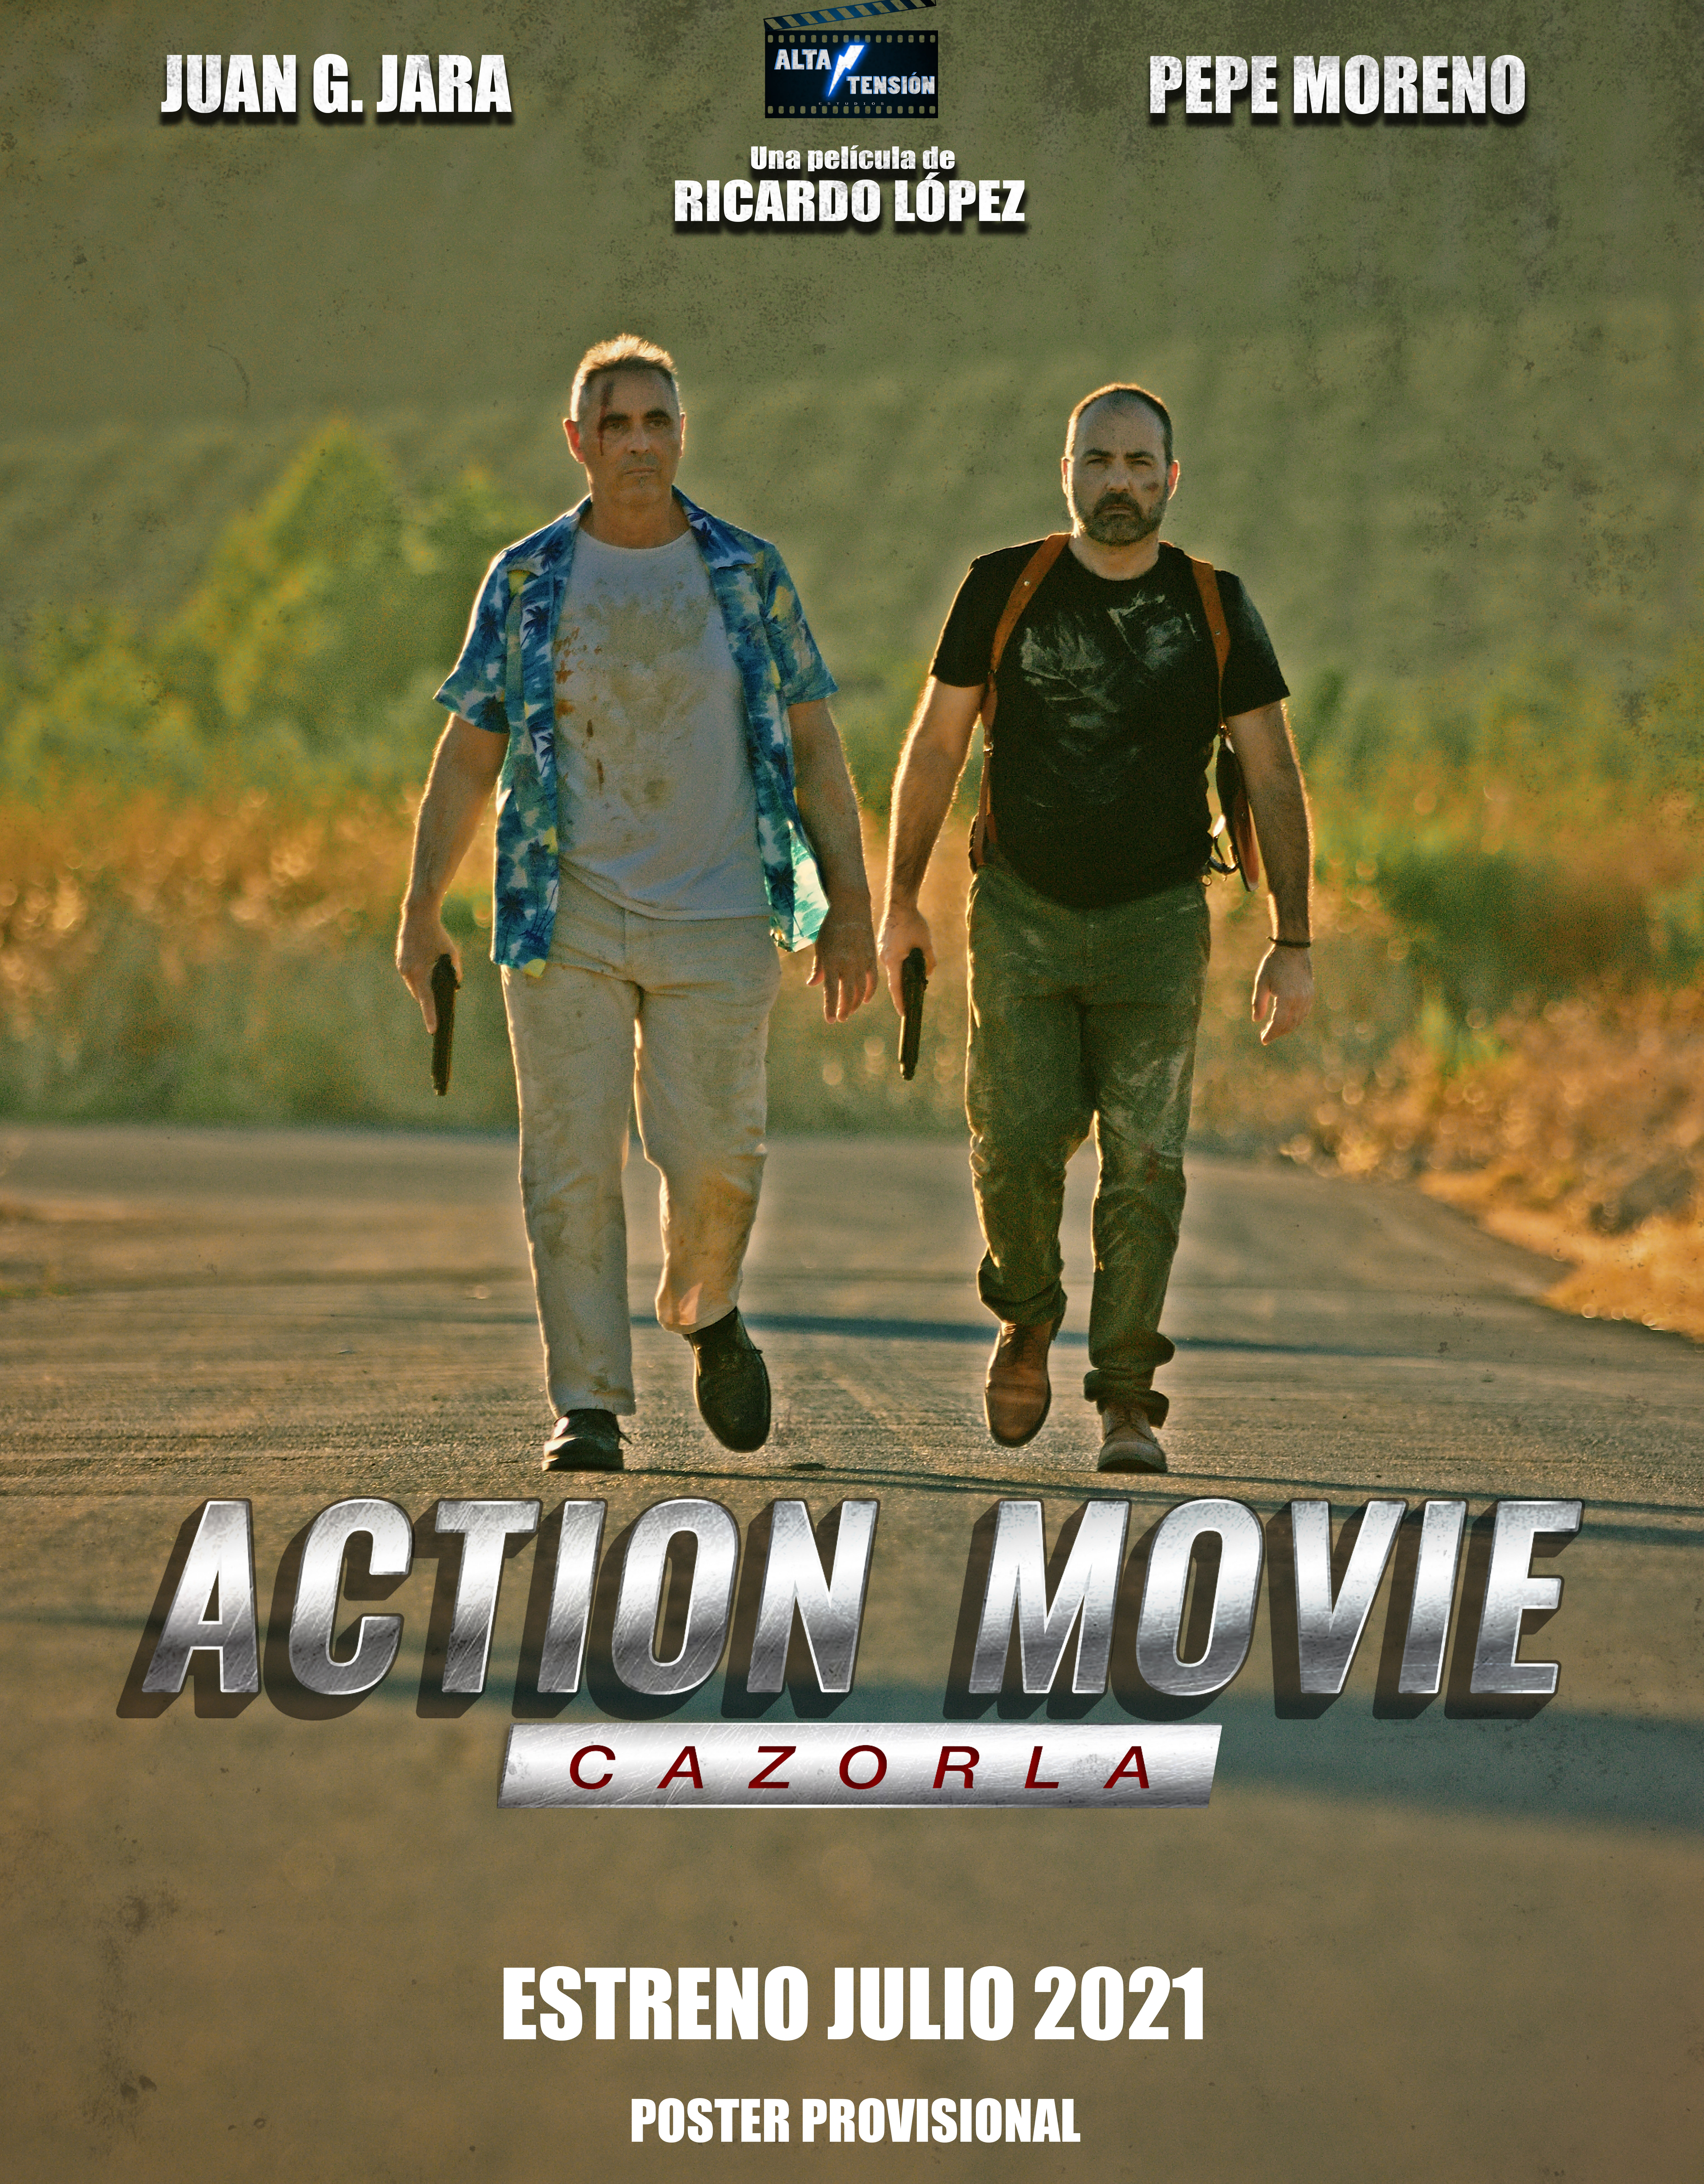 Action Movie Cazorla (2021)